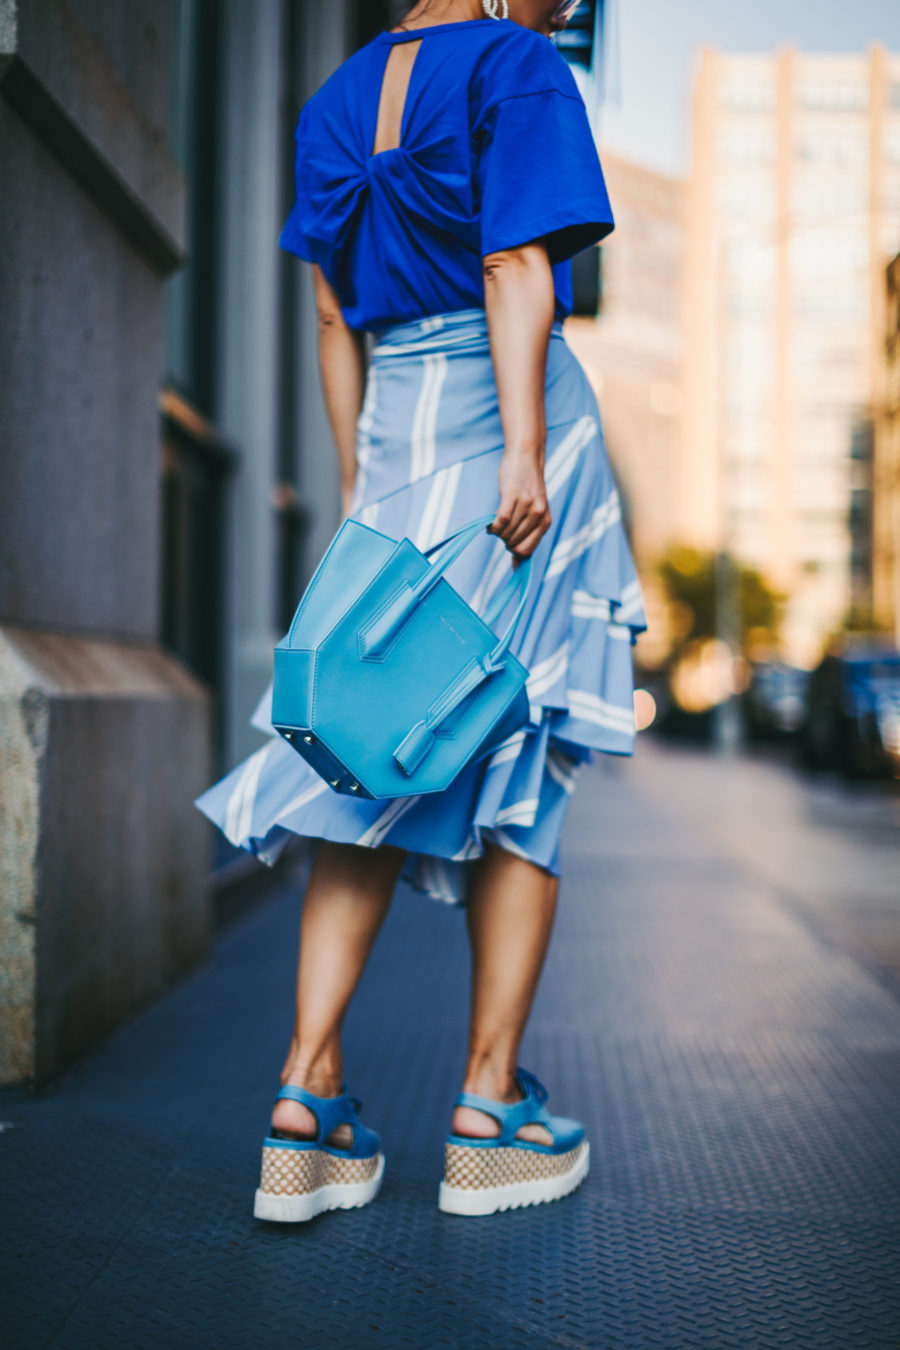 jessica wang wearing a blue shirt, asymmetrical skirt, and cut out platform sneakers // Jessica Wang - Notjessfashion.com